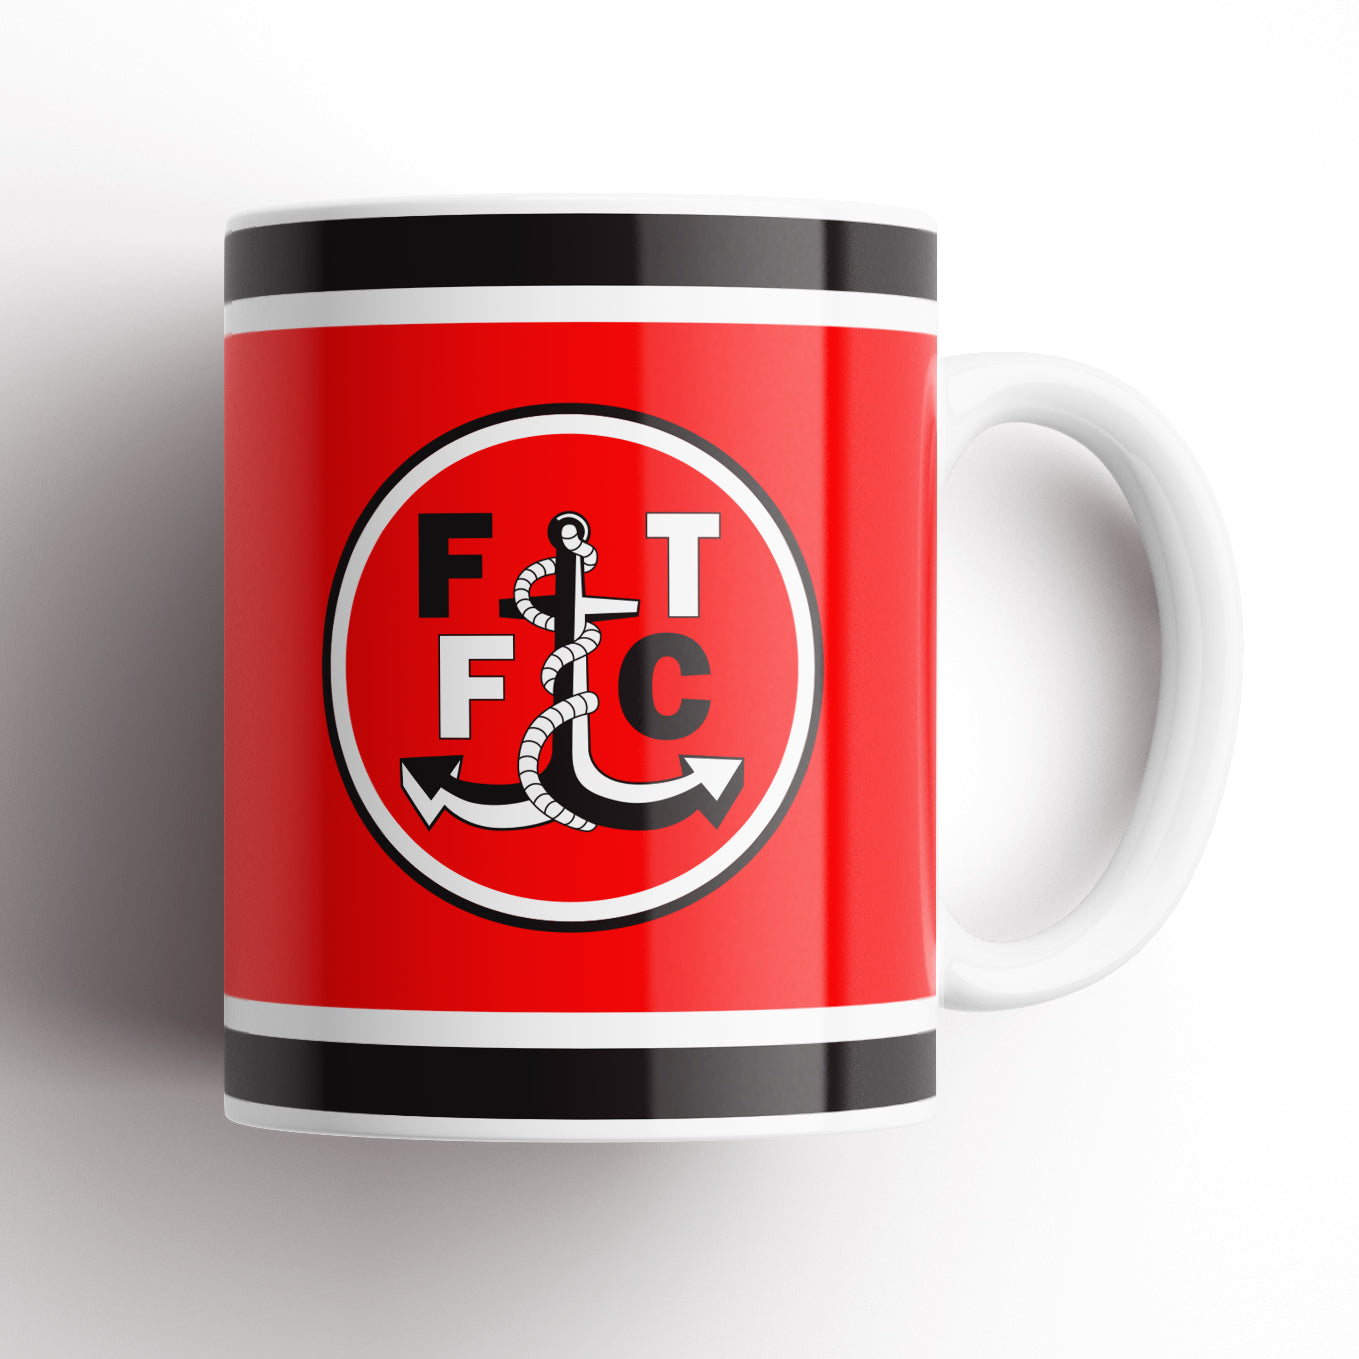 Fleetwood Town Football Club